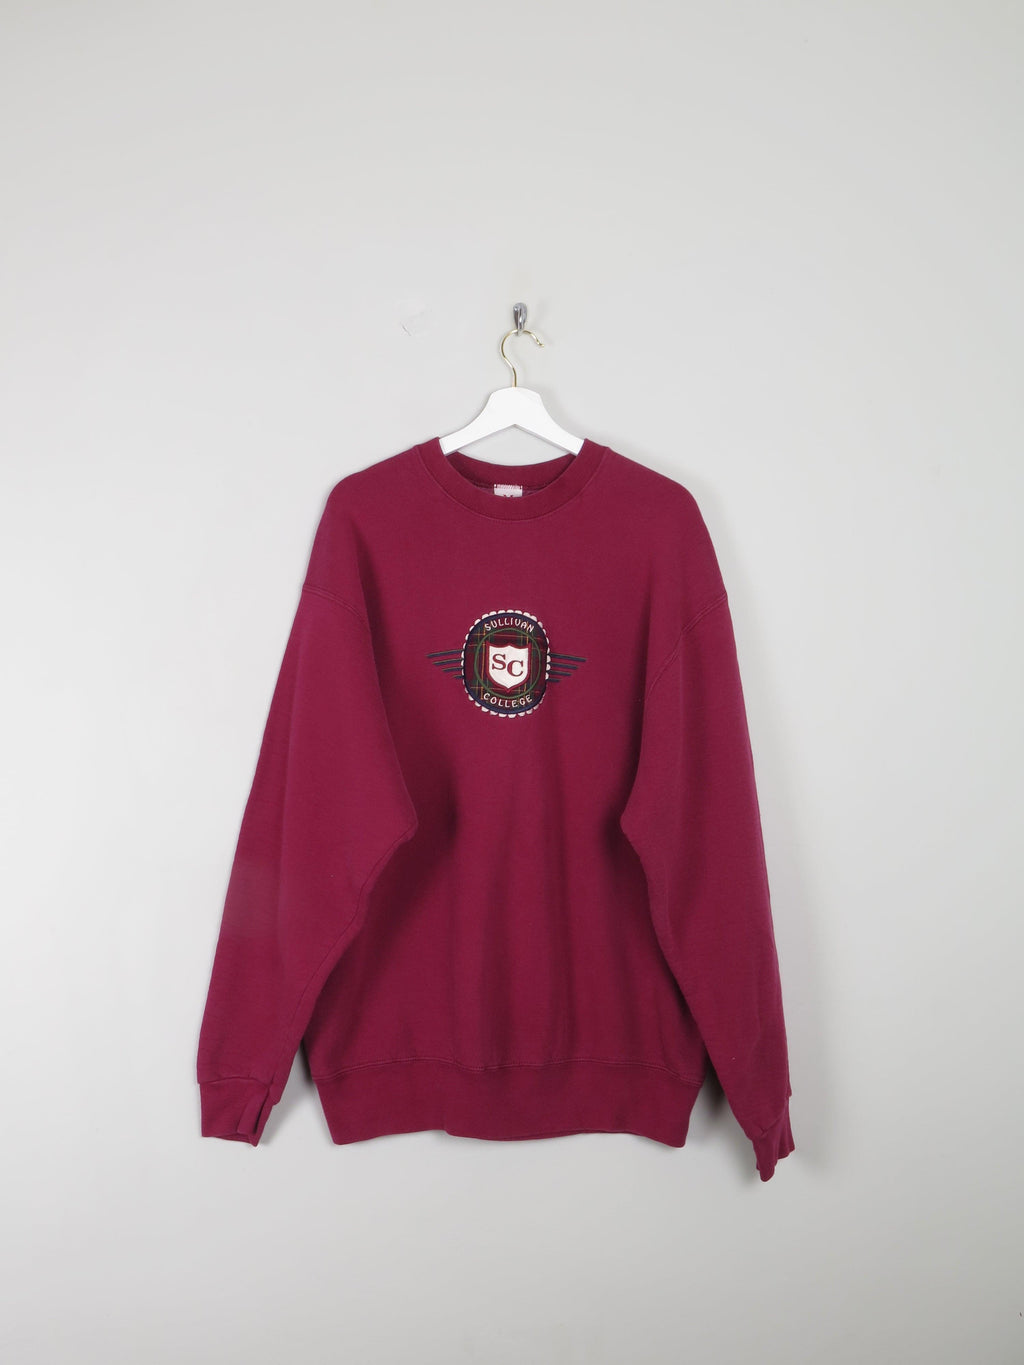 Men's Wine Vintage Sullivan College Sweatshirt L/XL - The Harlequin